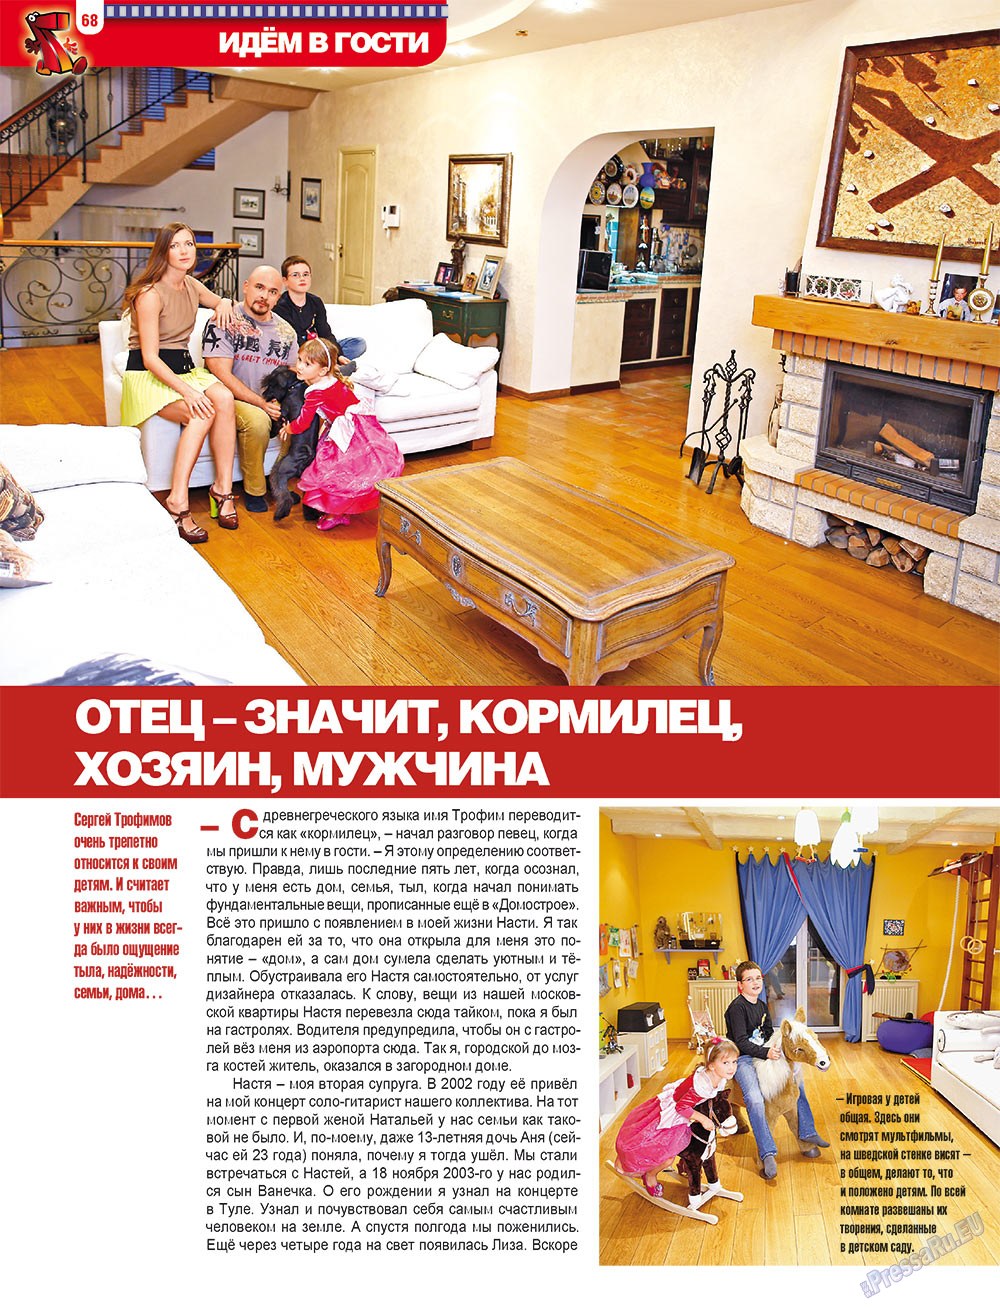 7плюс7я (журнал). 2012 год, номер 47, стр. 68